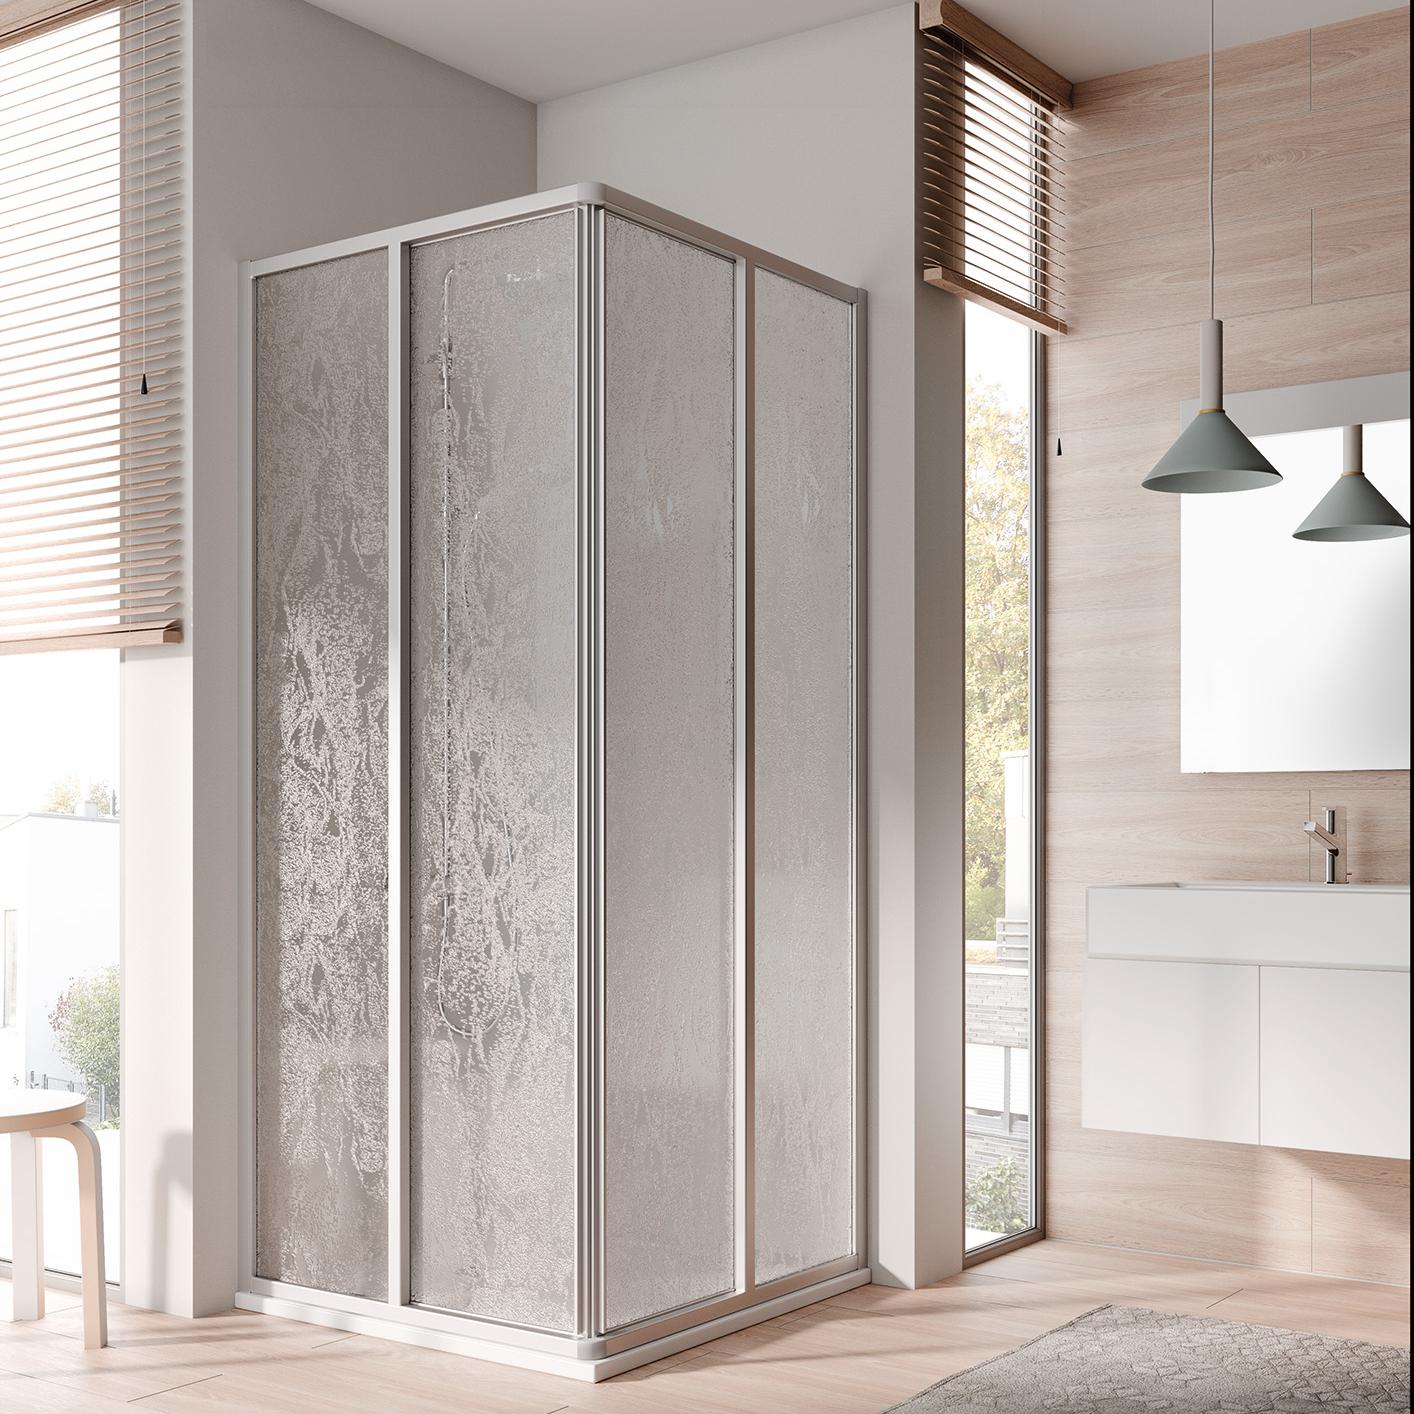 Kermi profile shower enclosure, NOVA 2000 two-part corner entry (sliding doors) – half part 